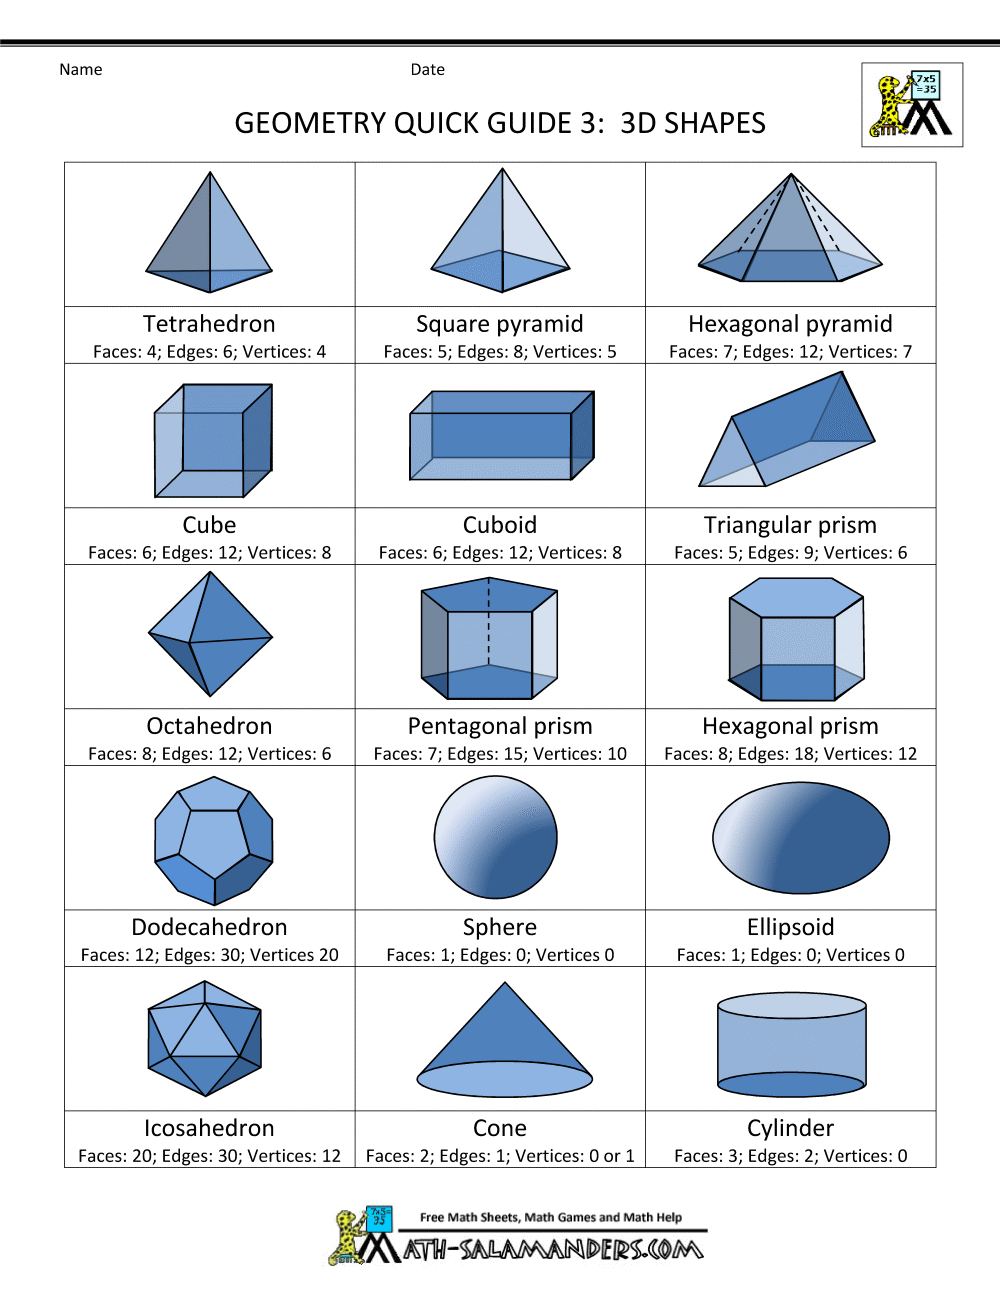 3d shapes geometry cardboard